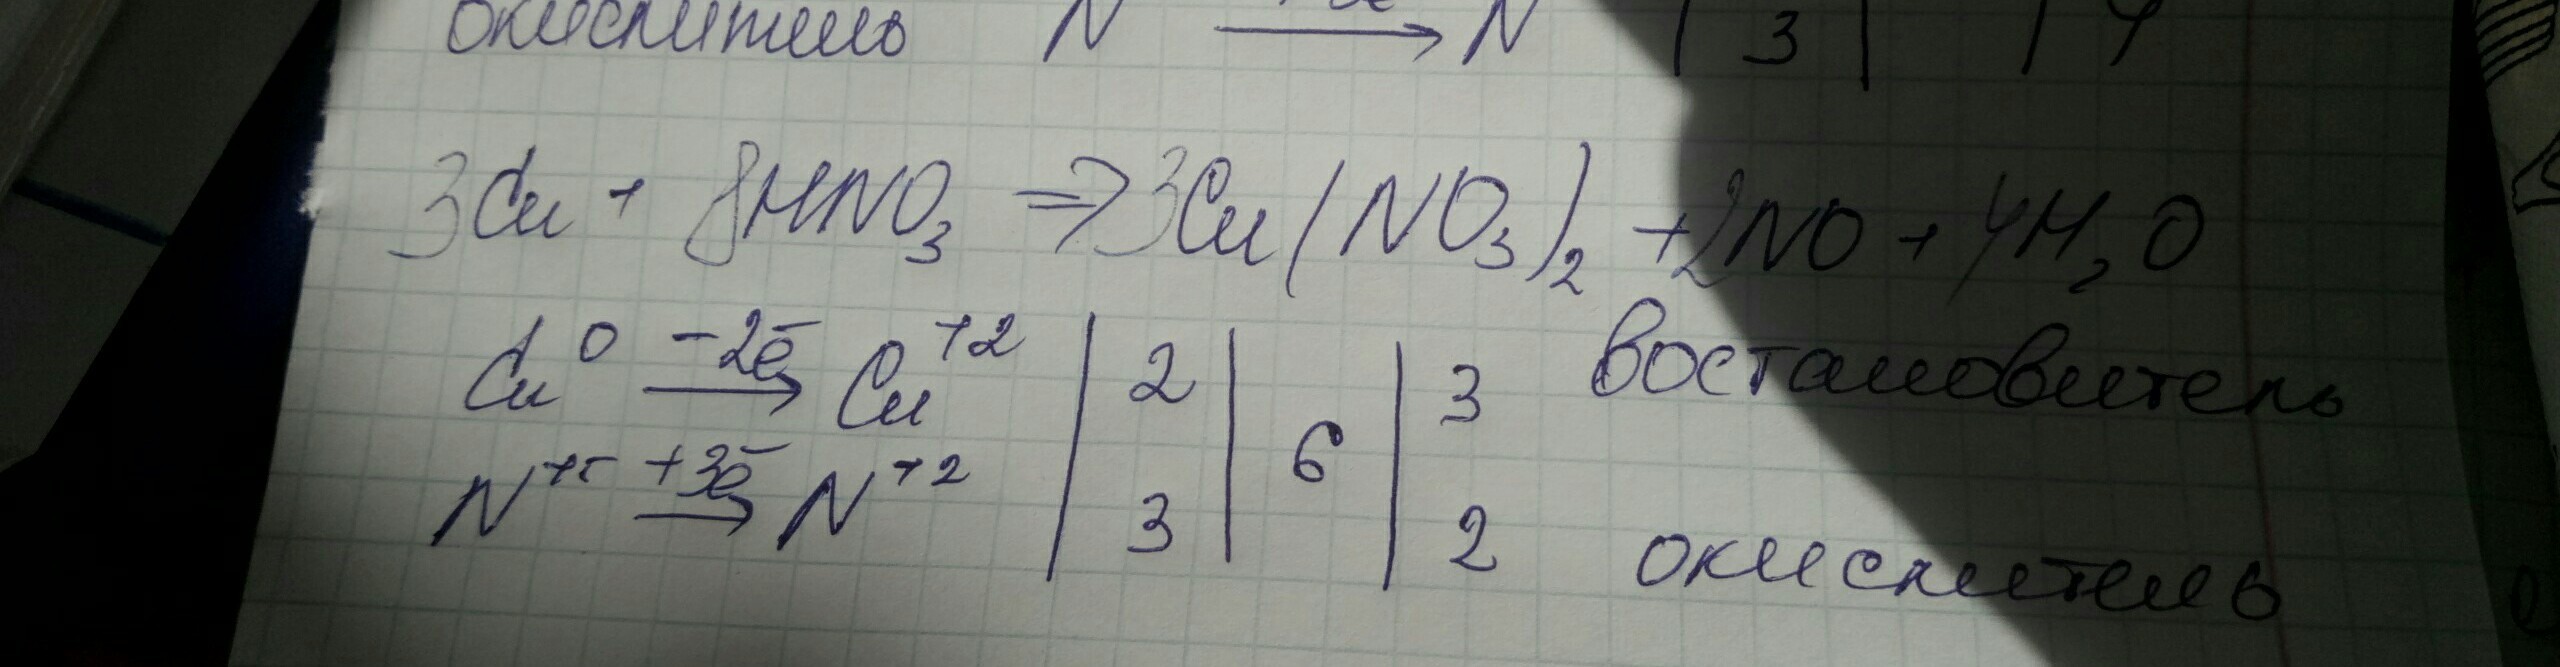 Cu no3 2 i2. Cu+hno3 метод полуреакций. No3 no2 полуреакция. Cu hno3 cu no3 2 no2 h2o метод полуреакций. No2 no3 метод полуреакций.